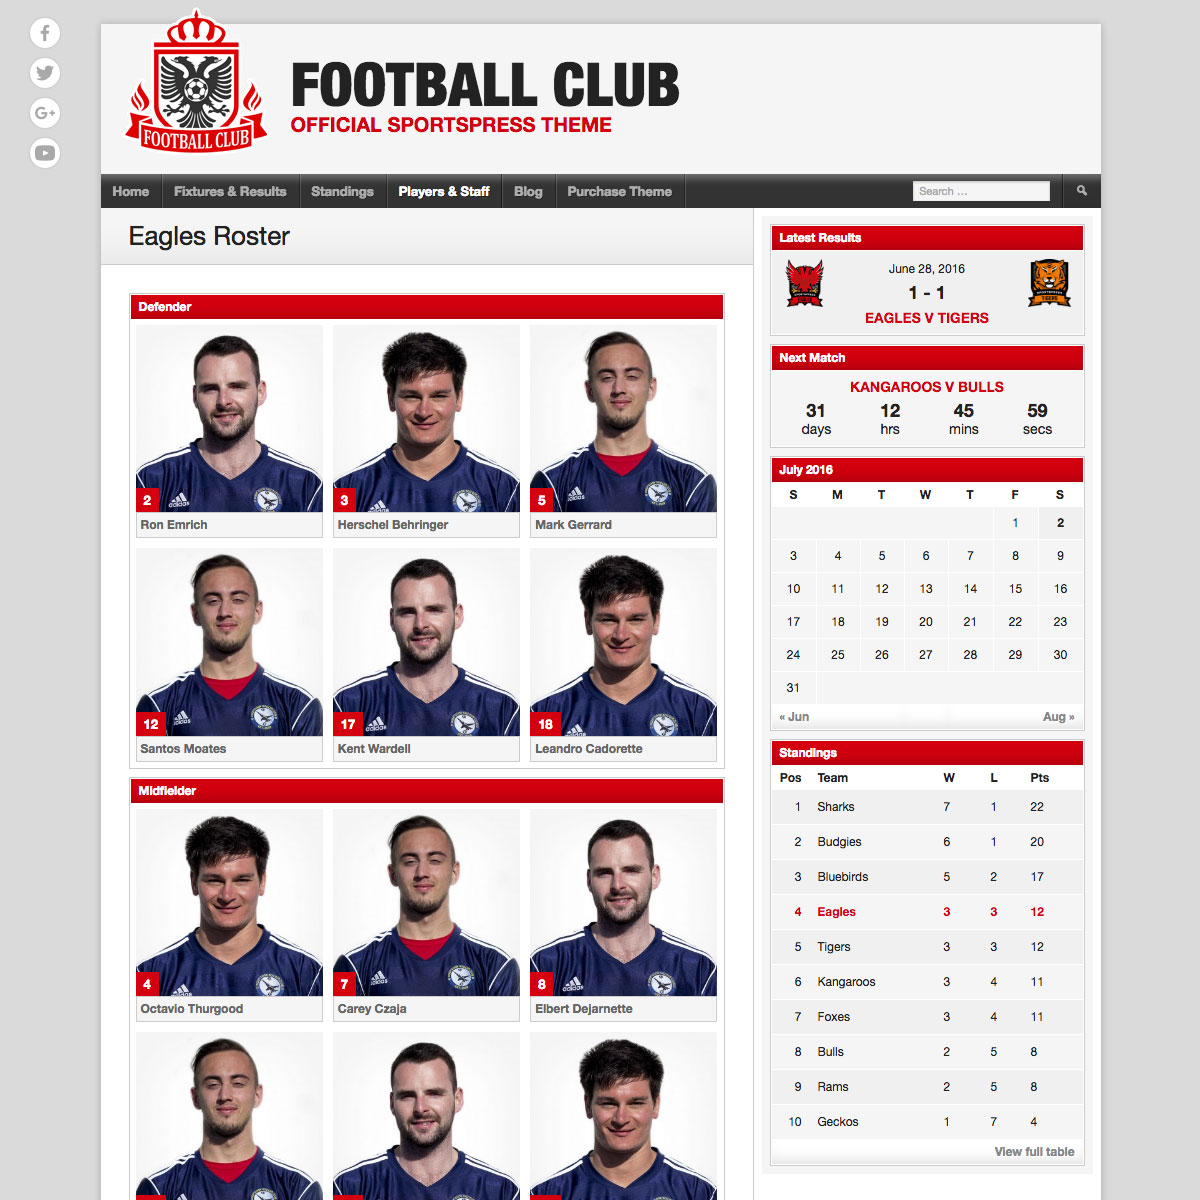 Football Club team profile